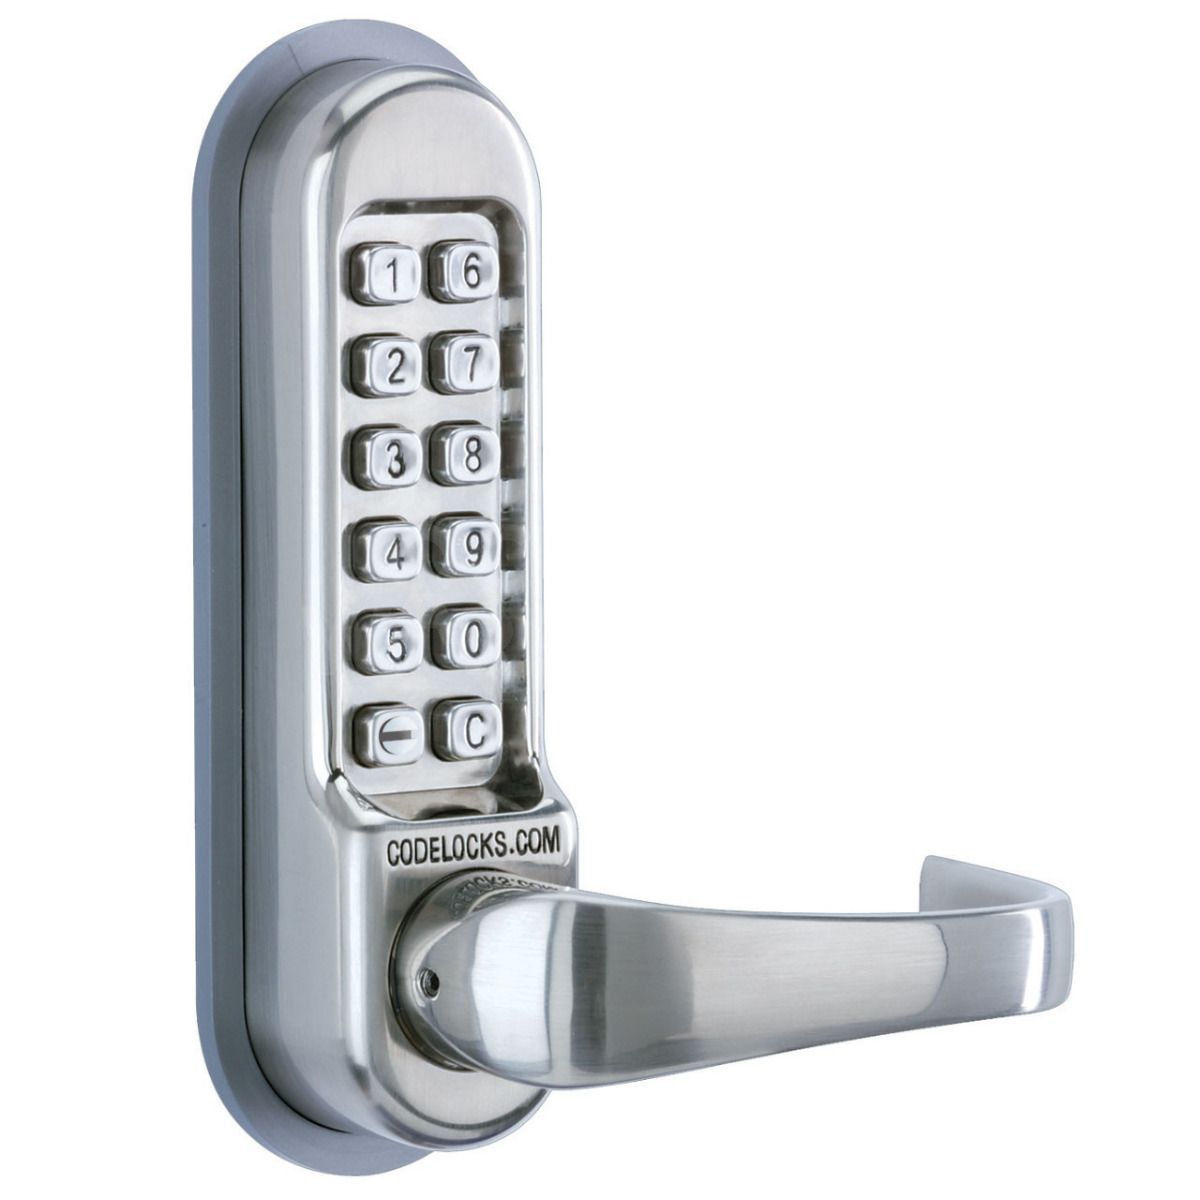 Codelocks 510/515 Mechanical Digital Lock includes tubular mortice latch